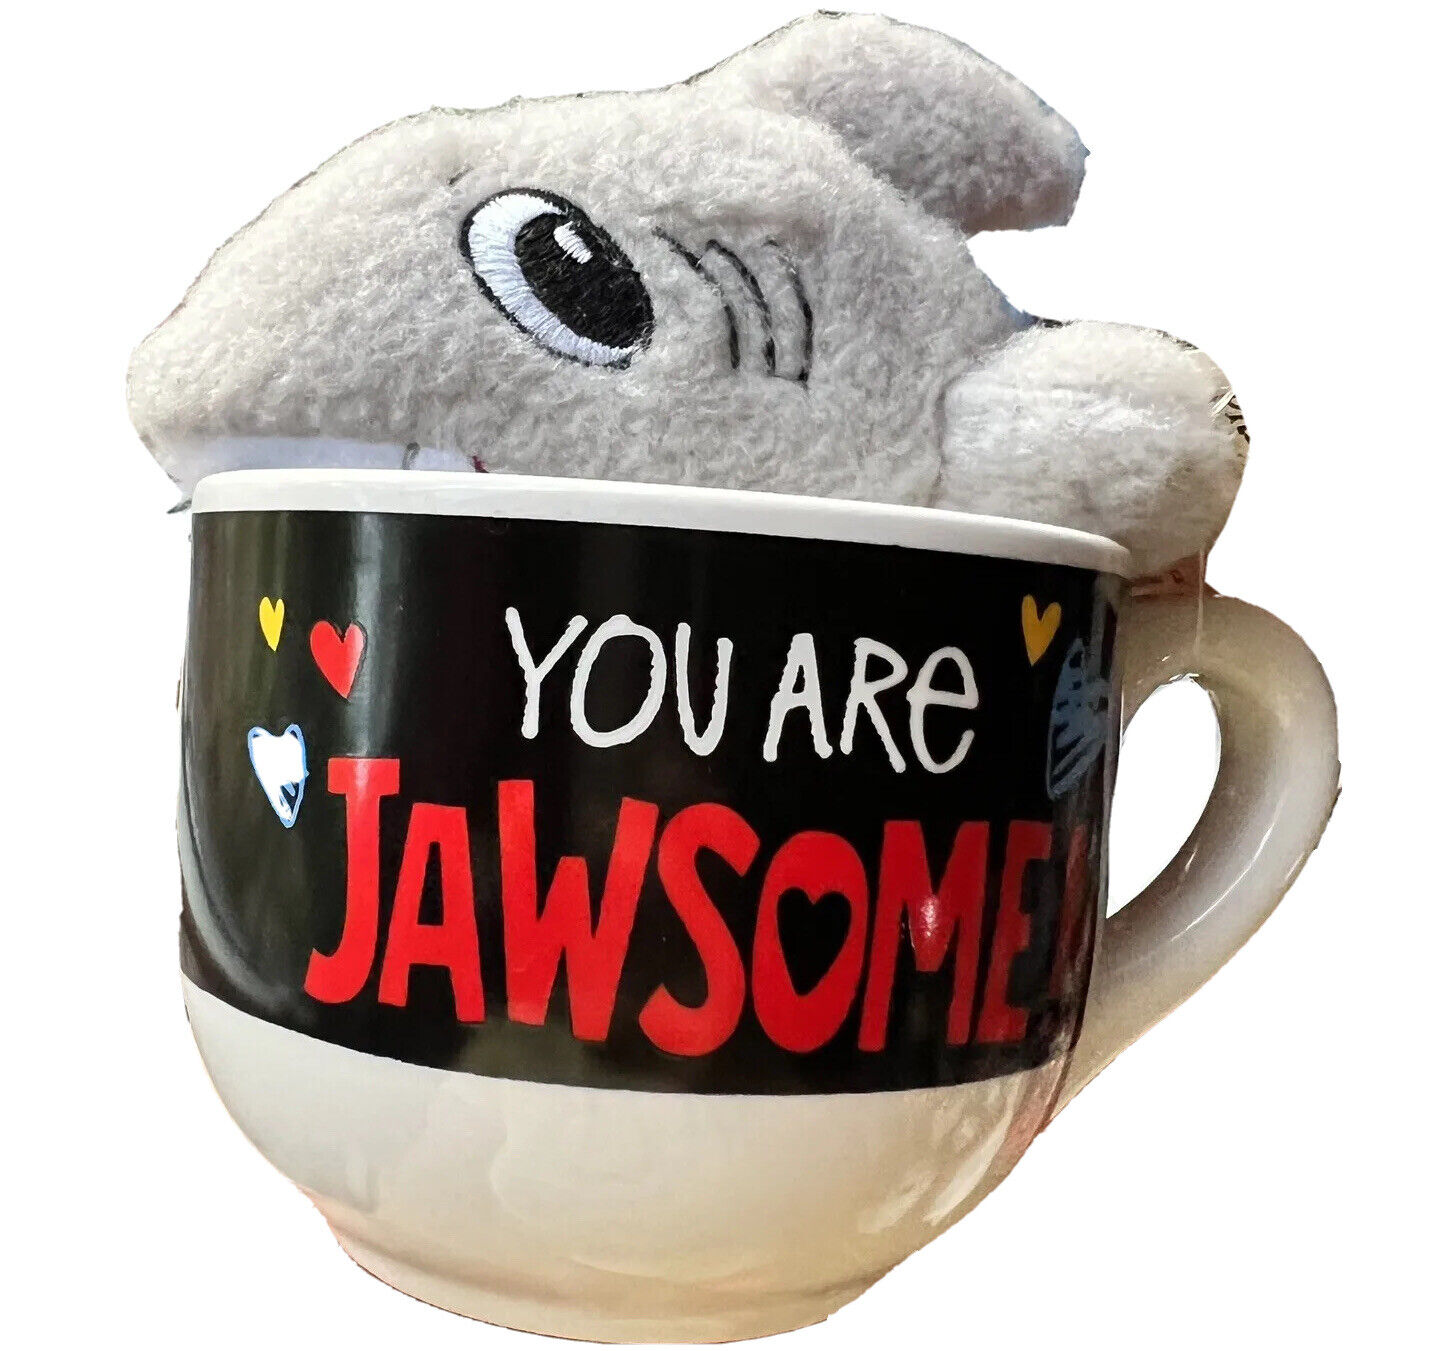 Shark stuffed plush and mug cup “You are jawsome”  Valentines